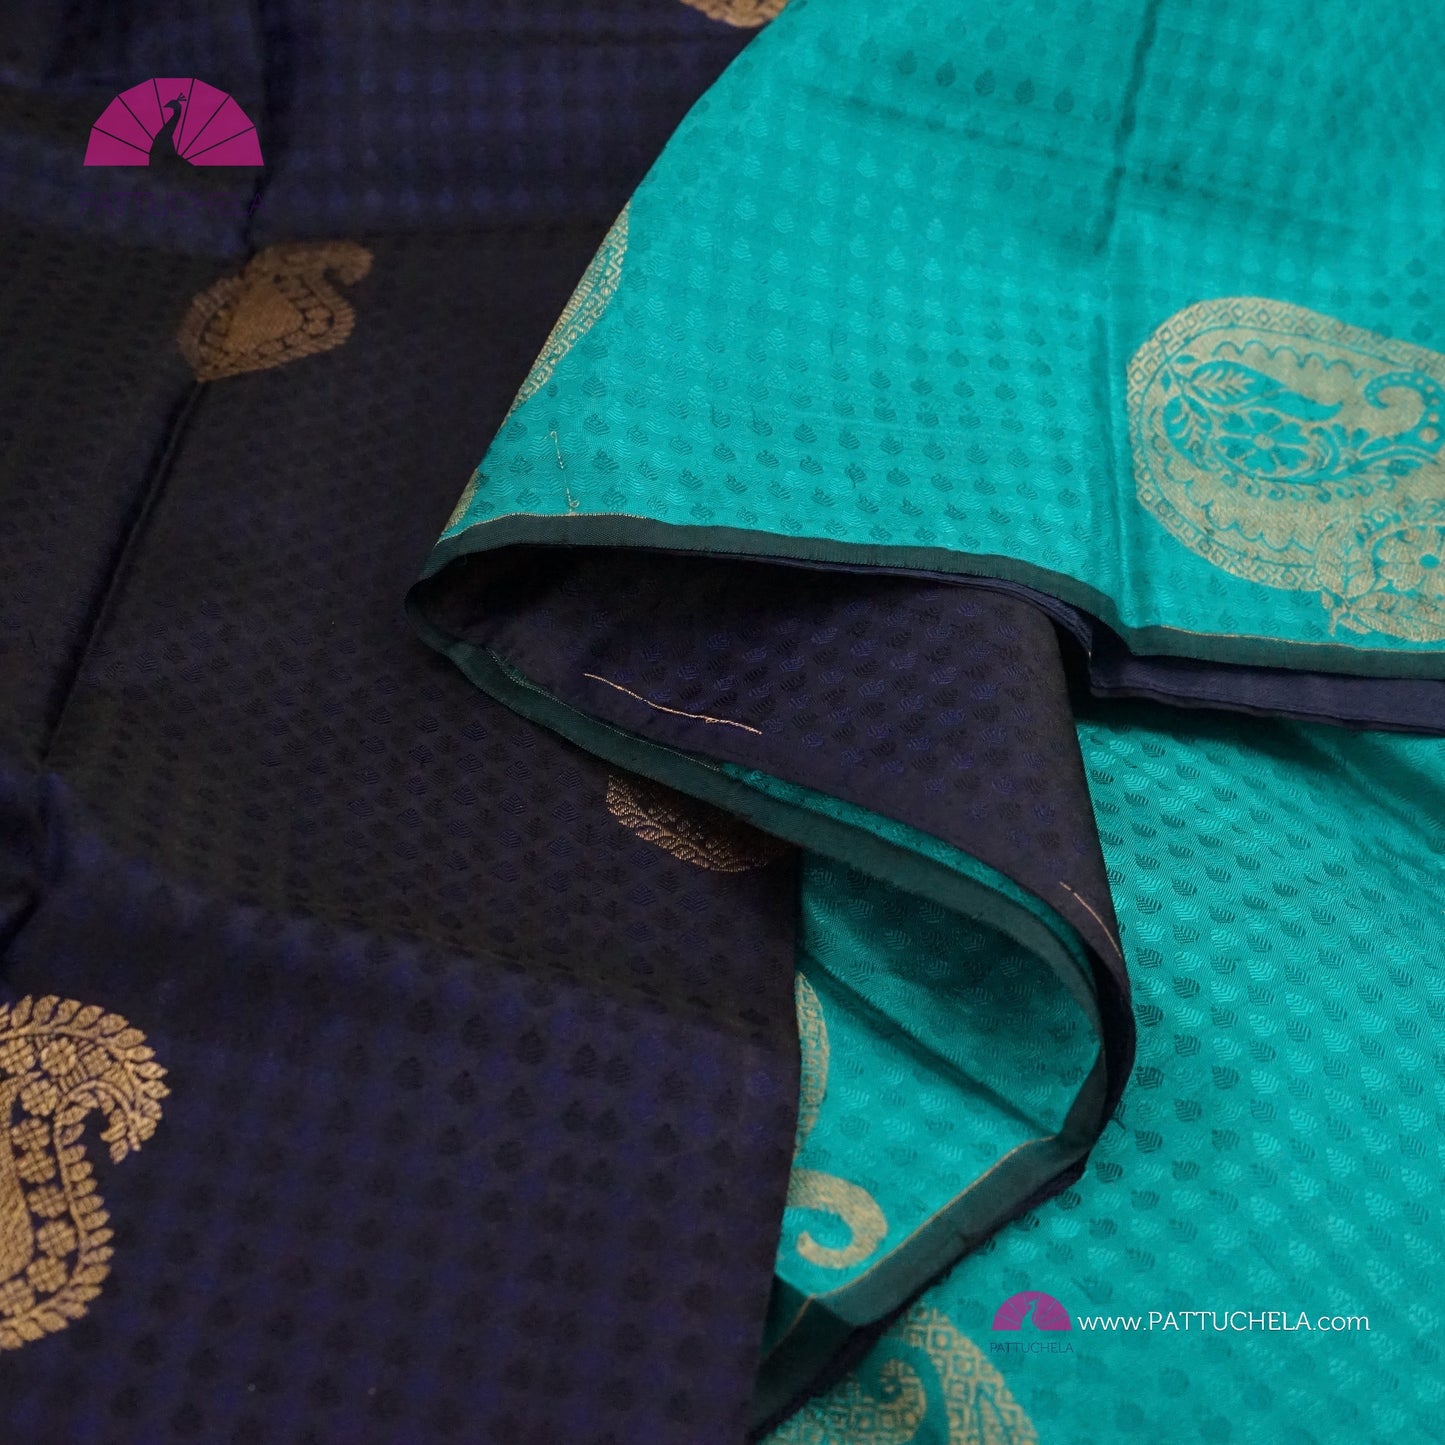 Pure Kanchipuram Silk Saree in Sky Blue and Navy Blue Hues with Zari Border and Paisley Motifs | Partly Pallu Style | Statement Saree | Trendy Design | SILK MARK CERTIFIED | Kanjivaram Silks